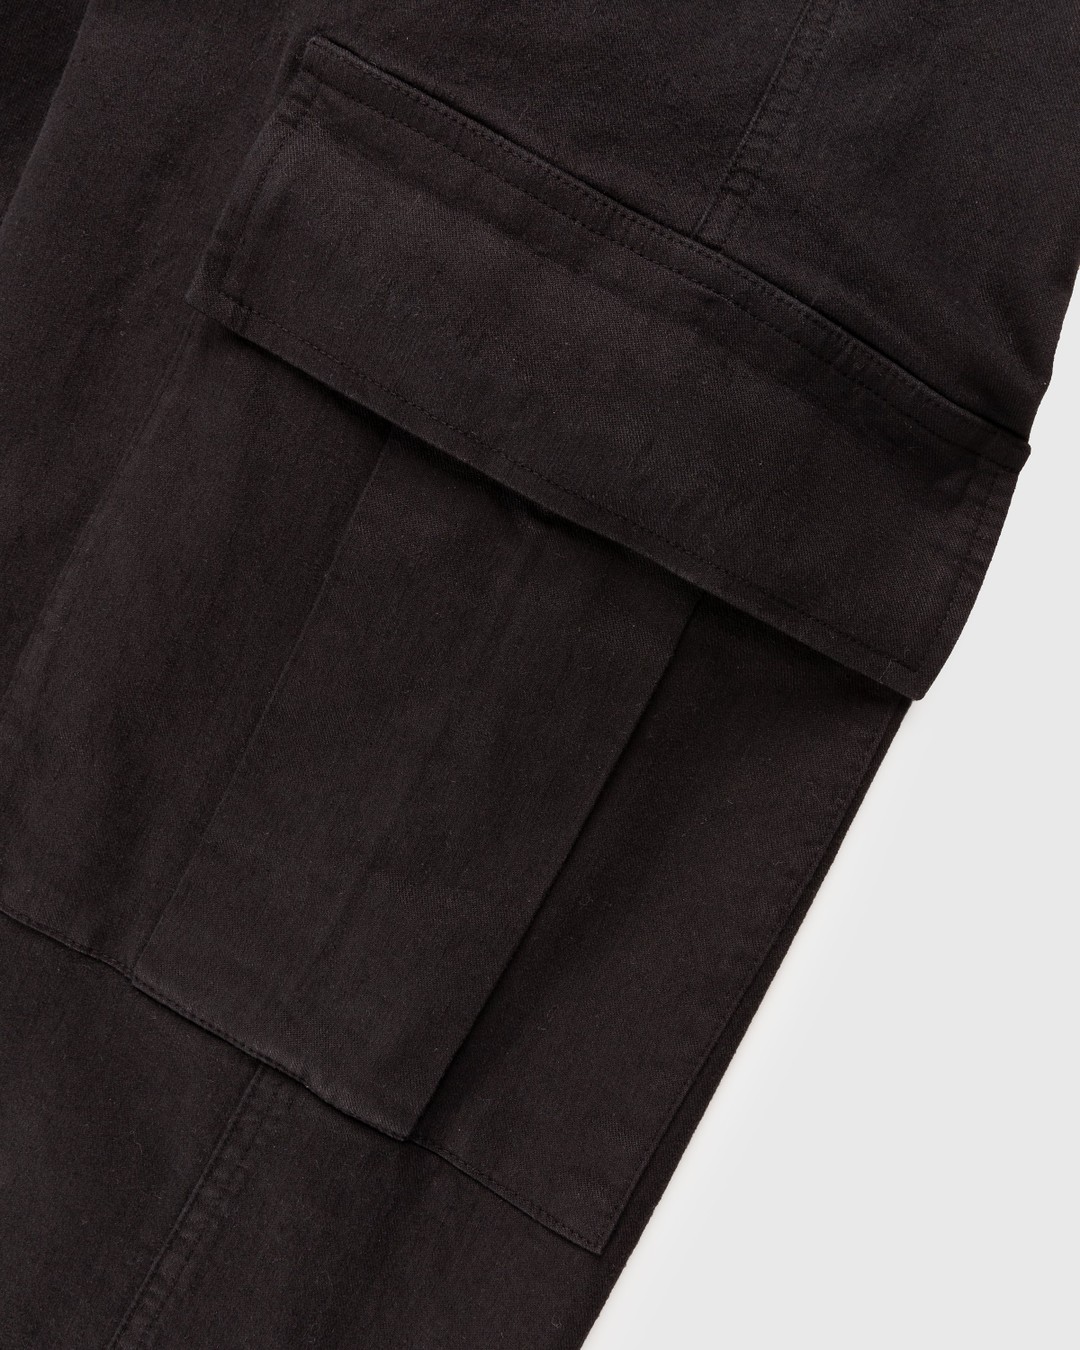 Winnie New York – Linen Cargo Pants Black - Pants - Black - Image 5